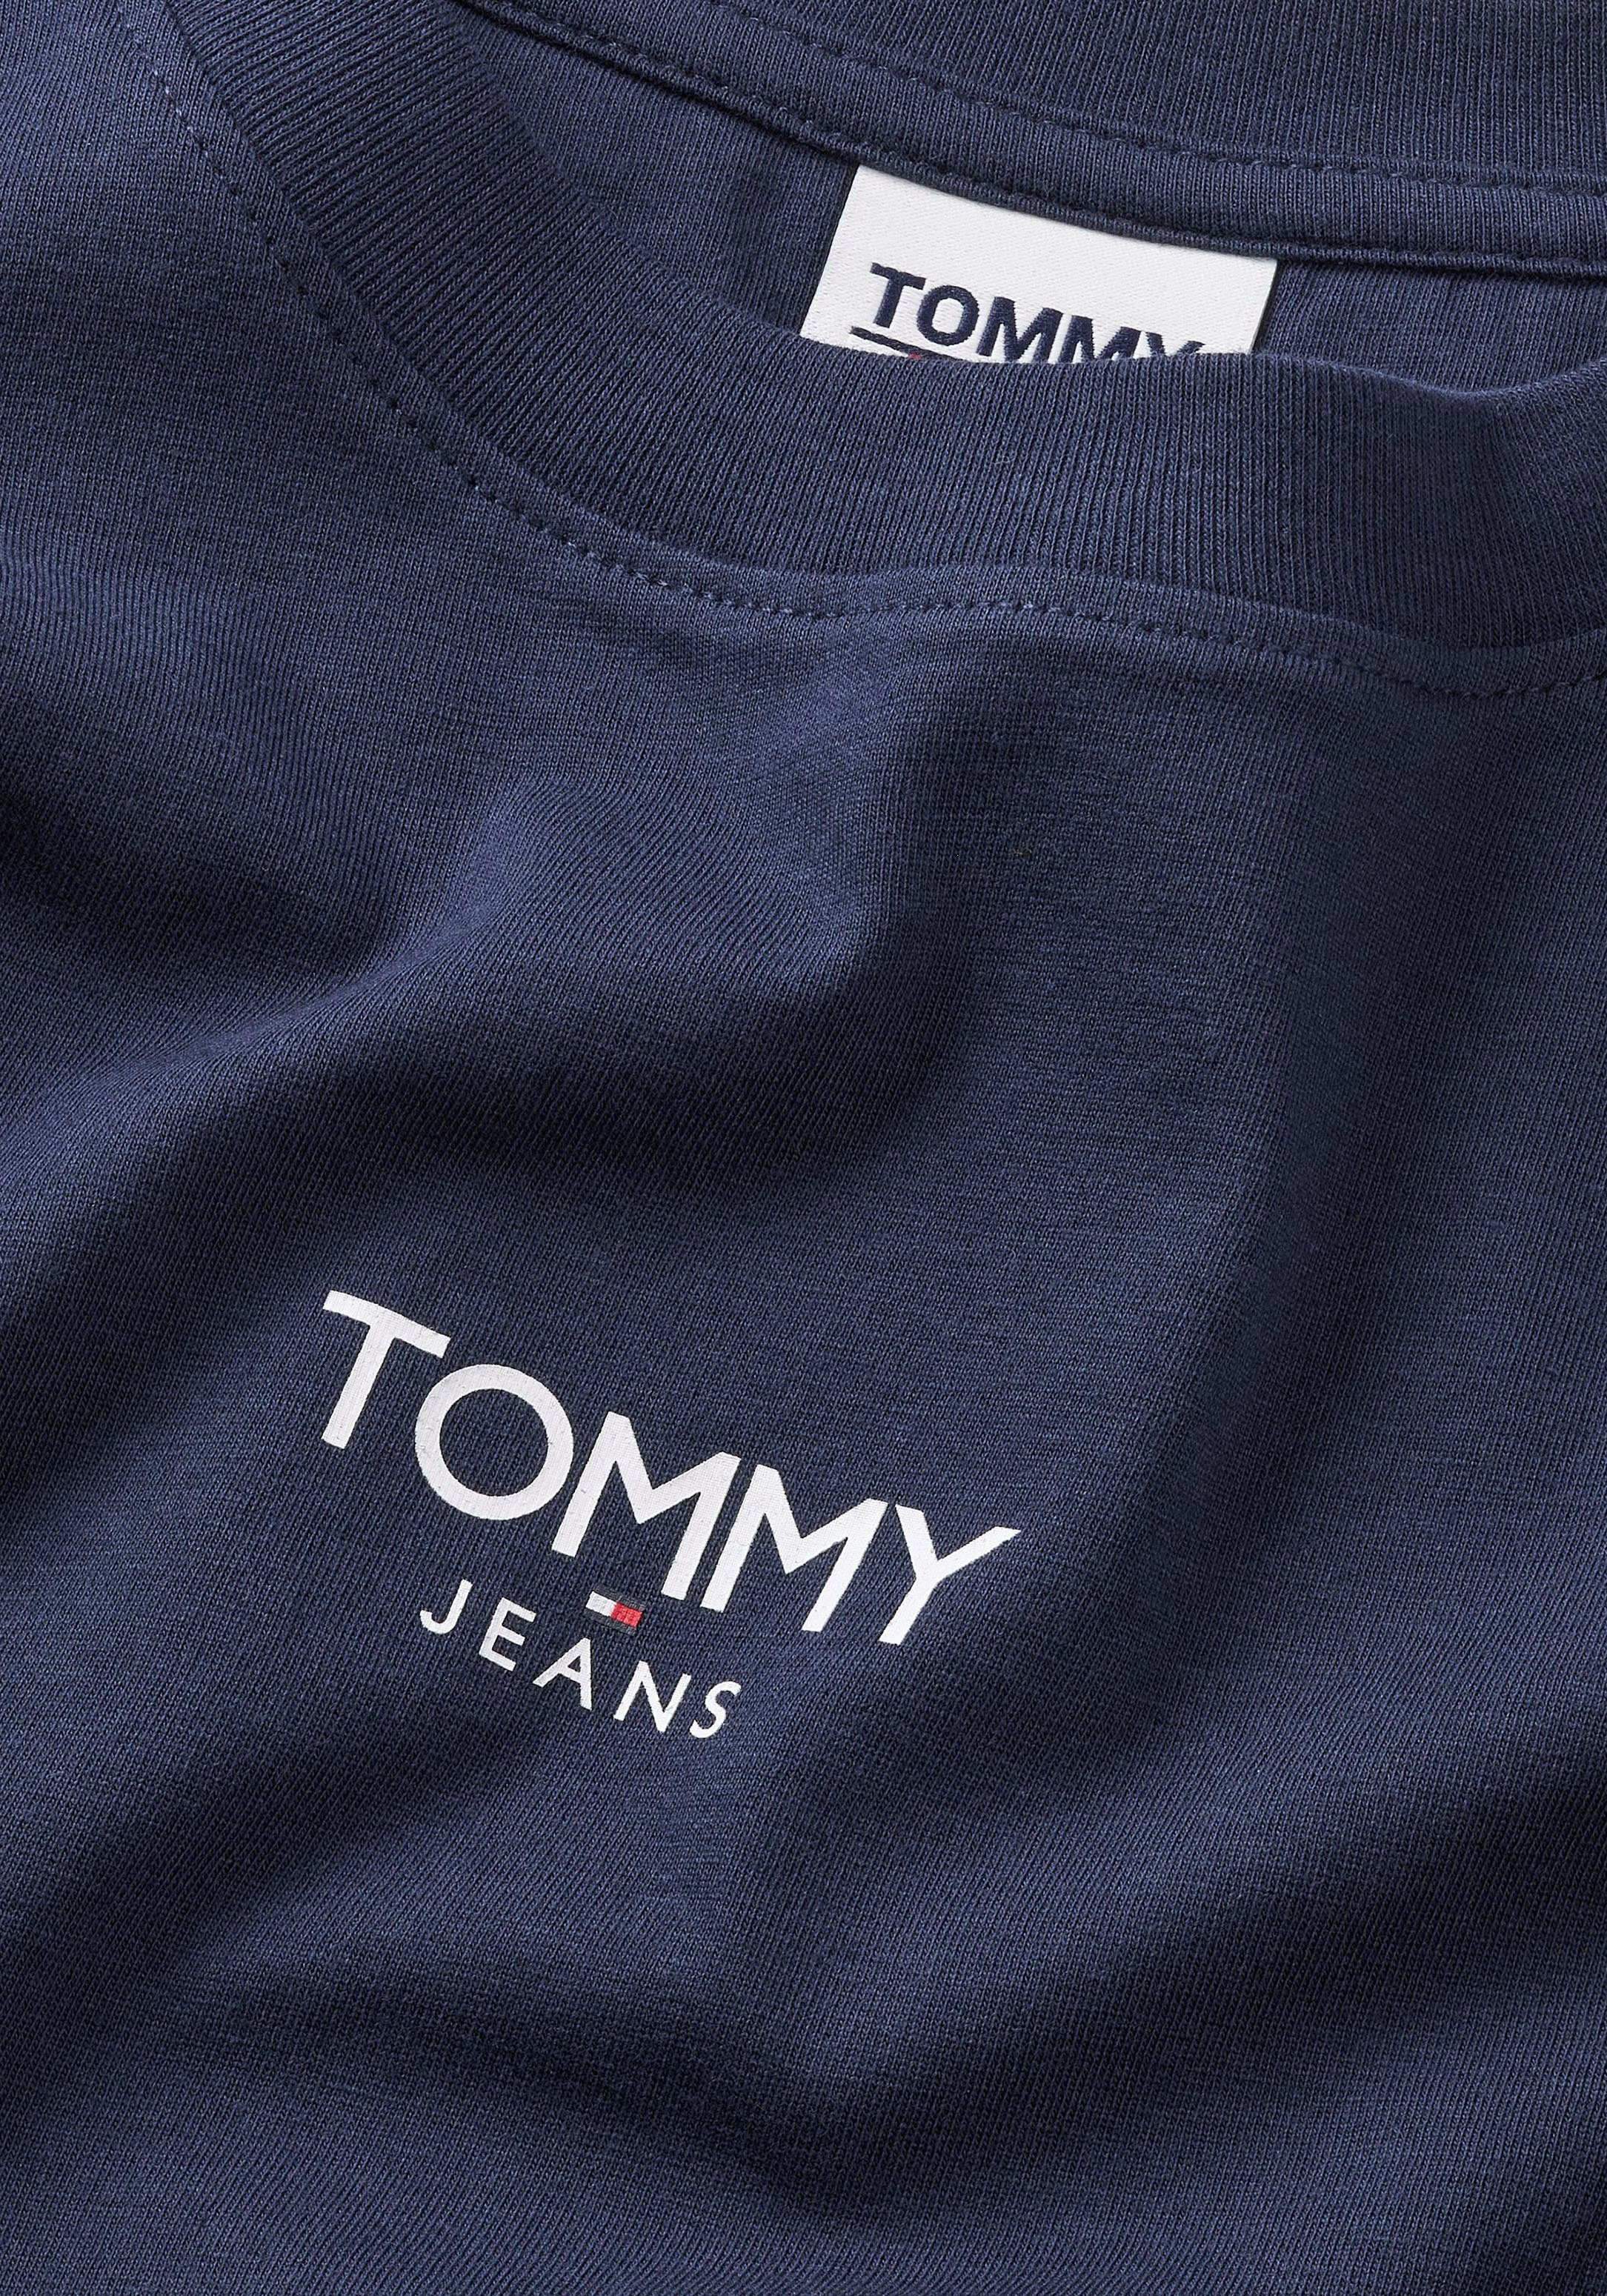 Tommy 1 Jeans Twilight TJW T-Shirt mit ESSENTIAL Tommy LOGO Navy Jeans BBY Logo SS